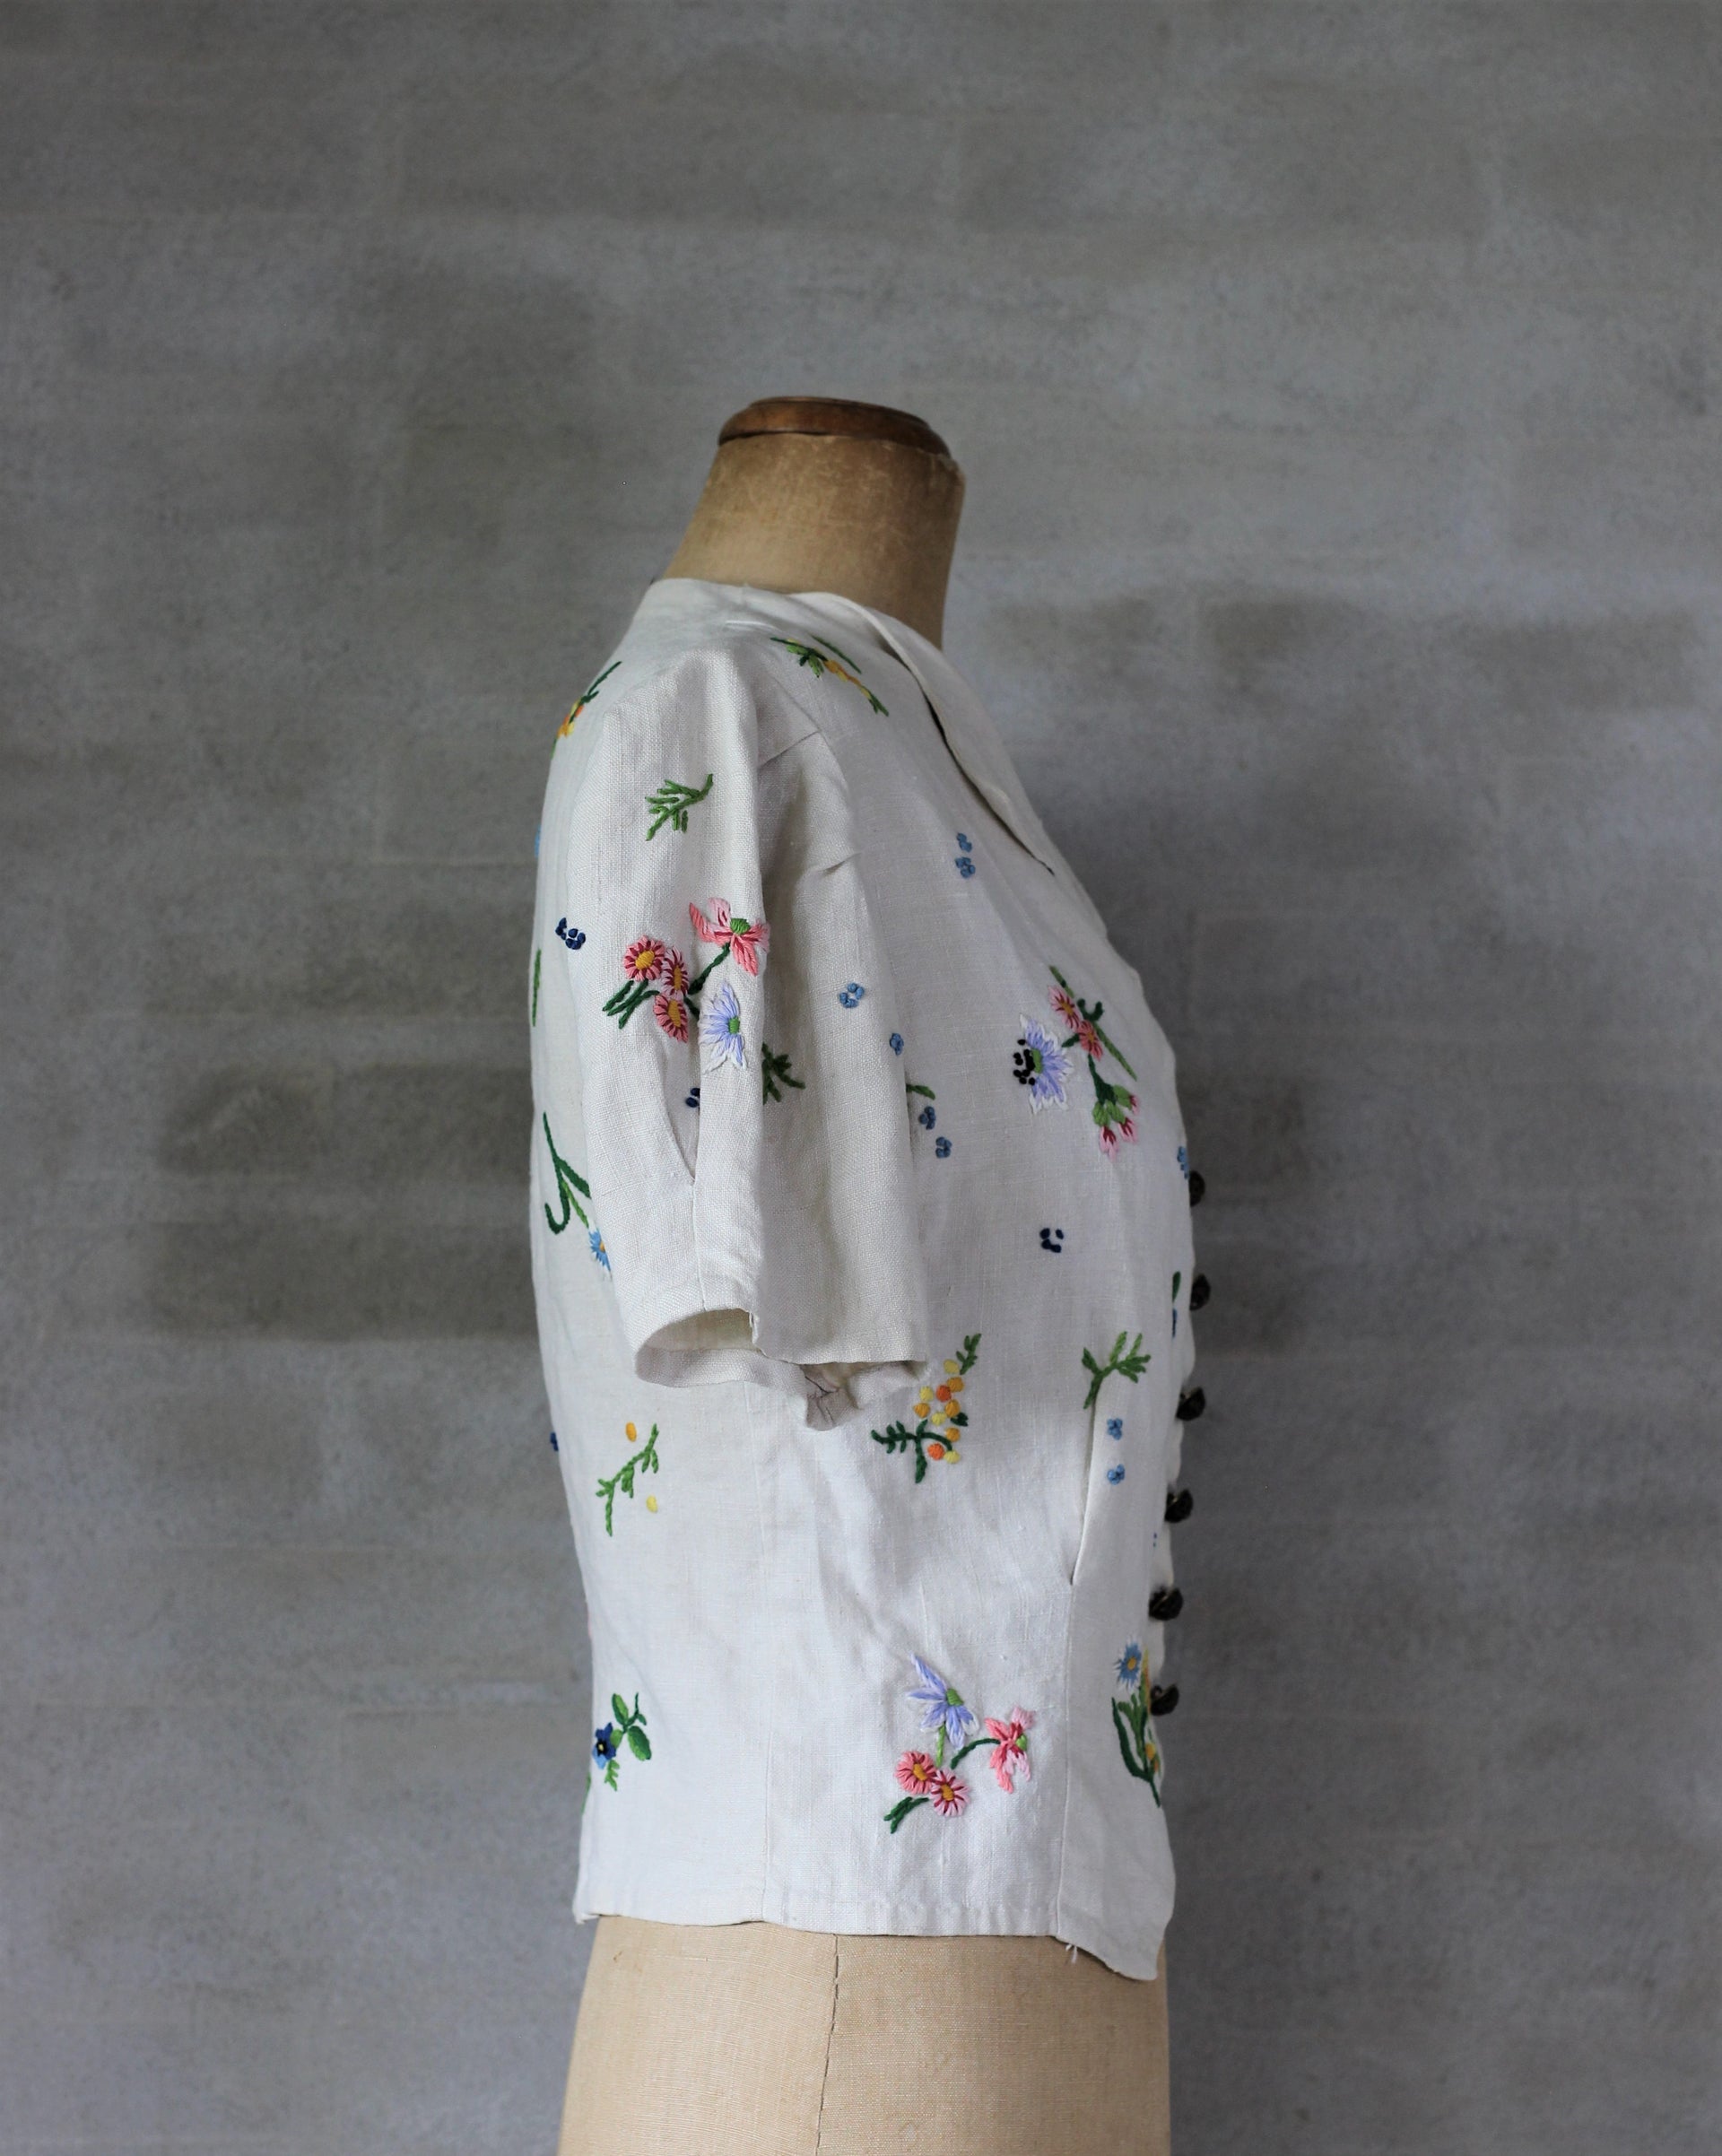 1930s Linen Blouse/Summer Jacket//Size M